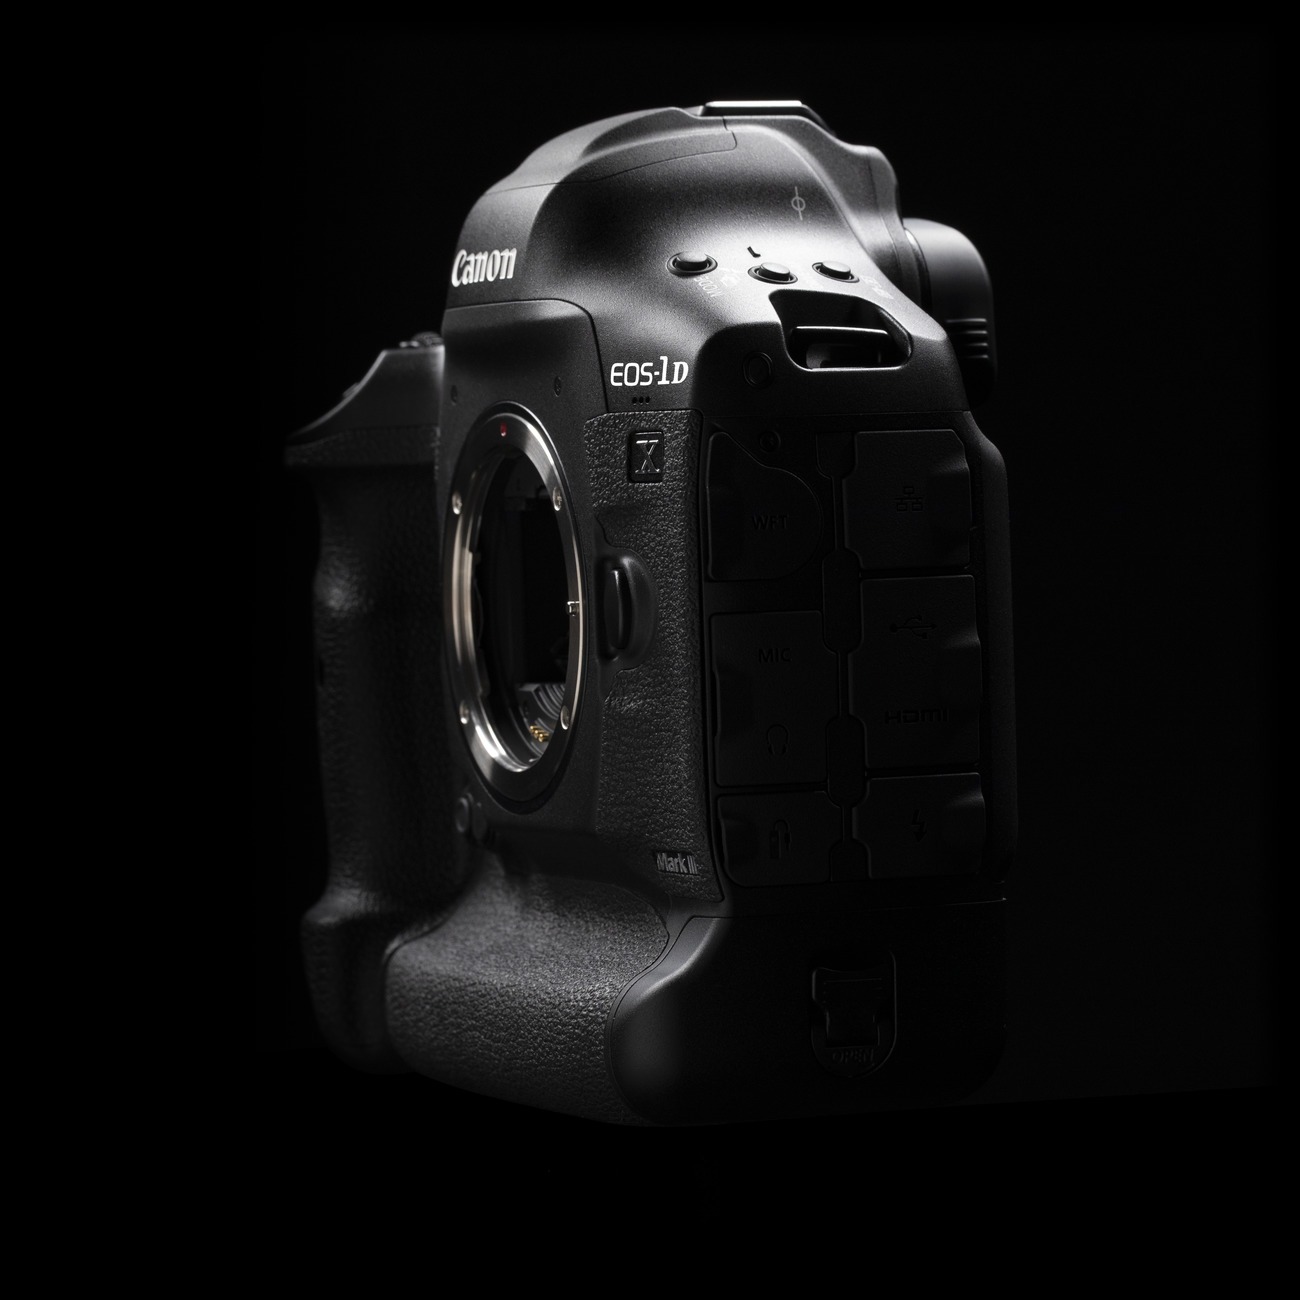 Canon анонсировала разработку камеры EOS-1D X Mark III